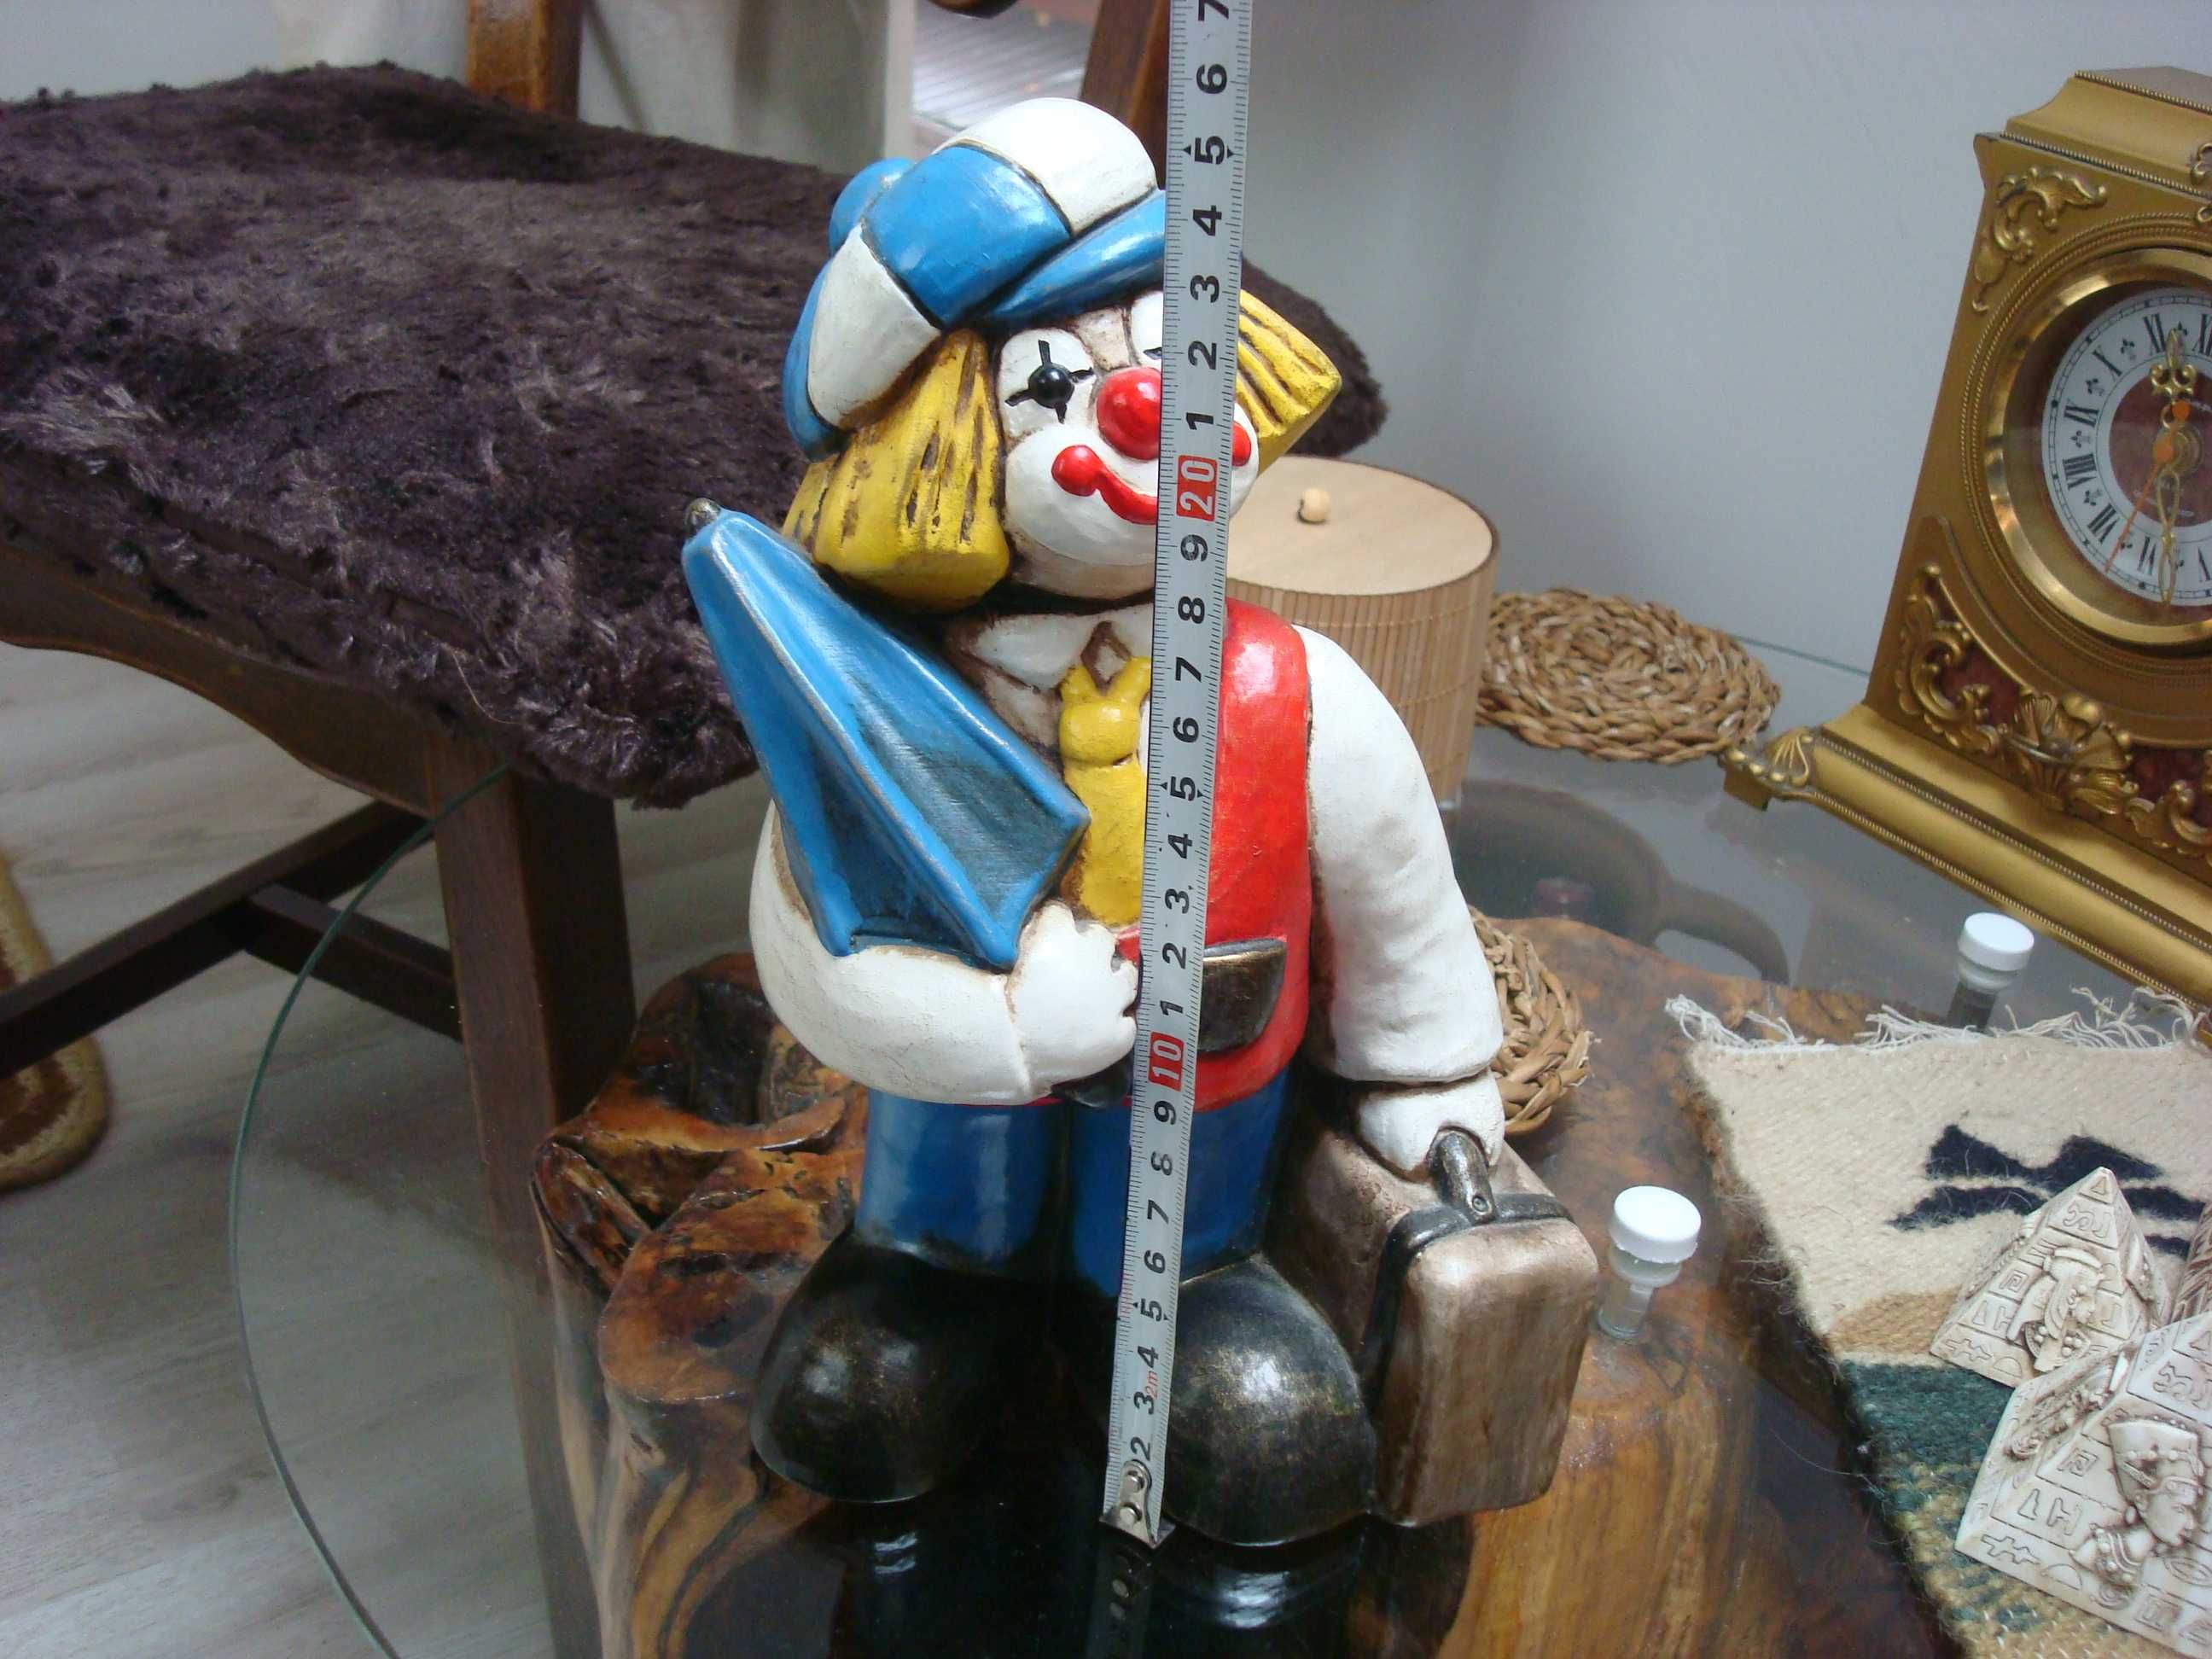 clown,clovn din ceramica original Thun